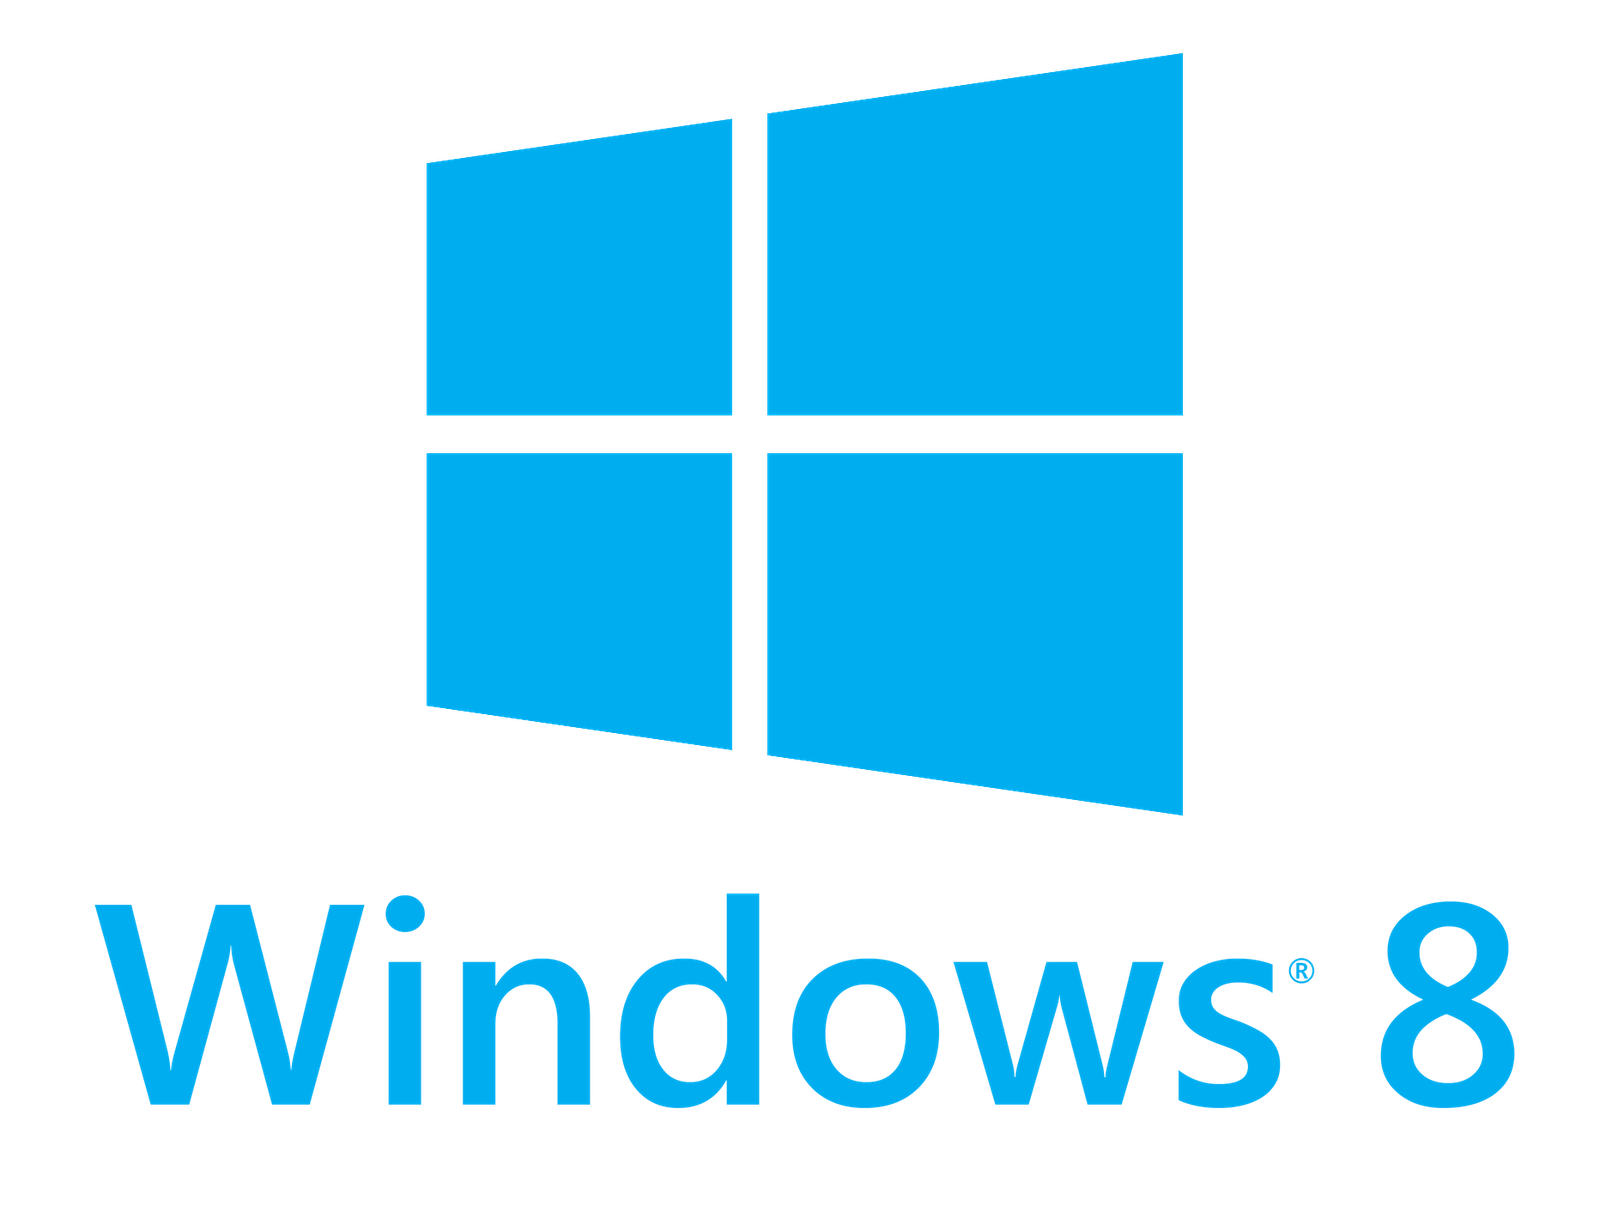 New Windows 8 Logo - Windows 8.1 to see return of Start Menu